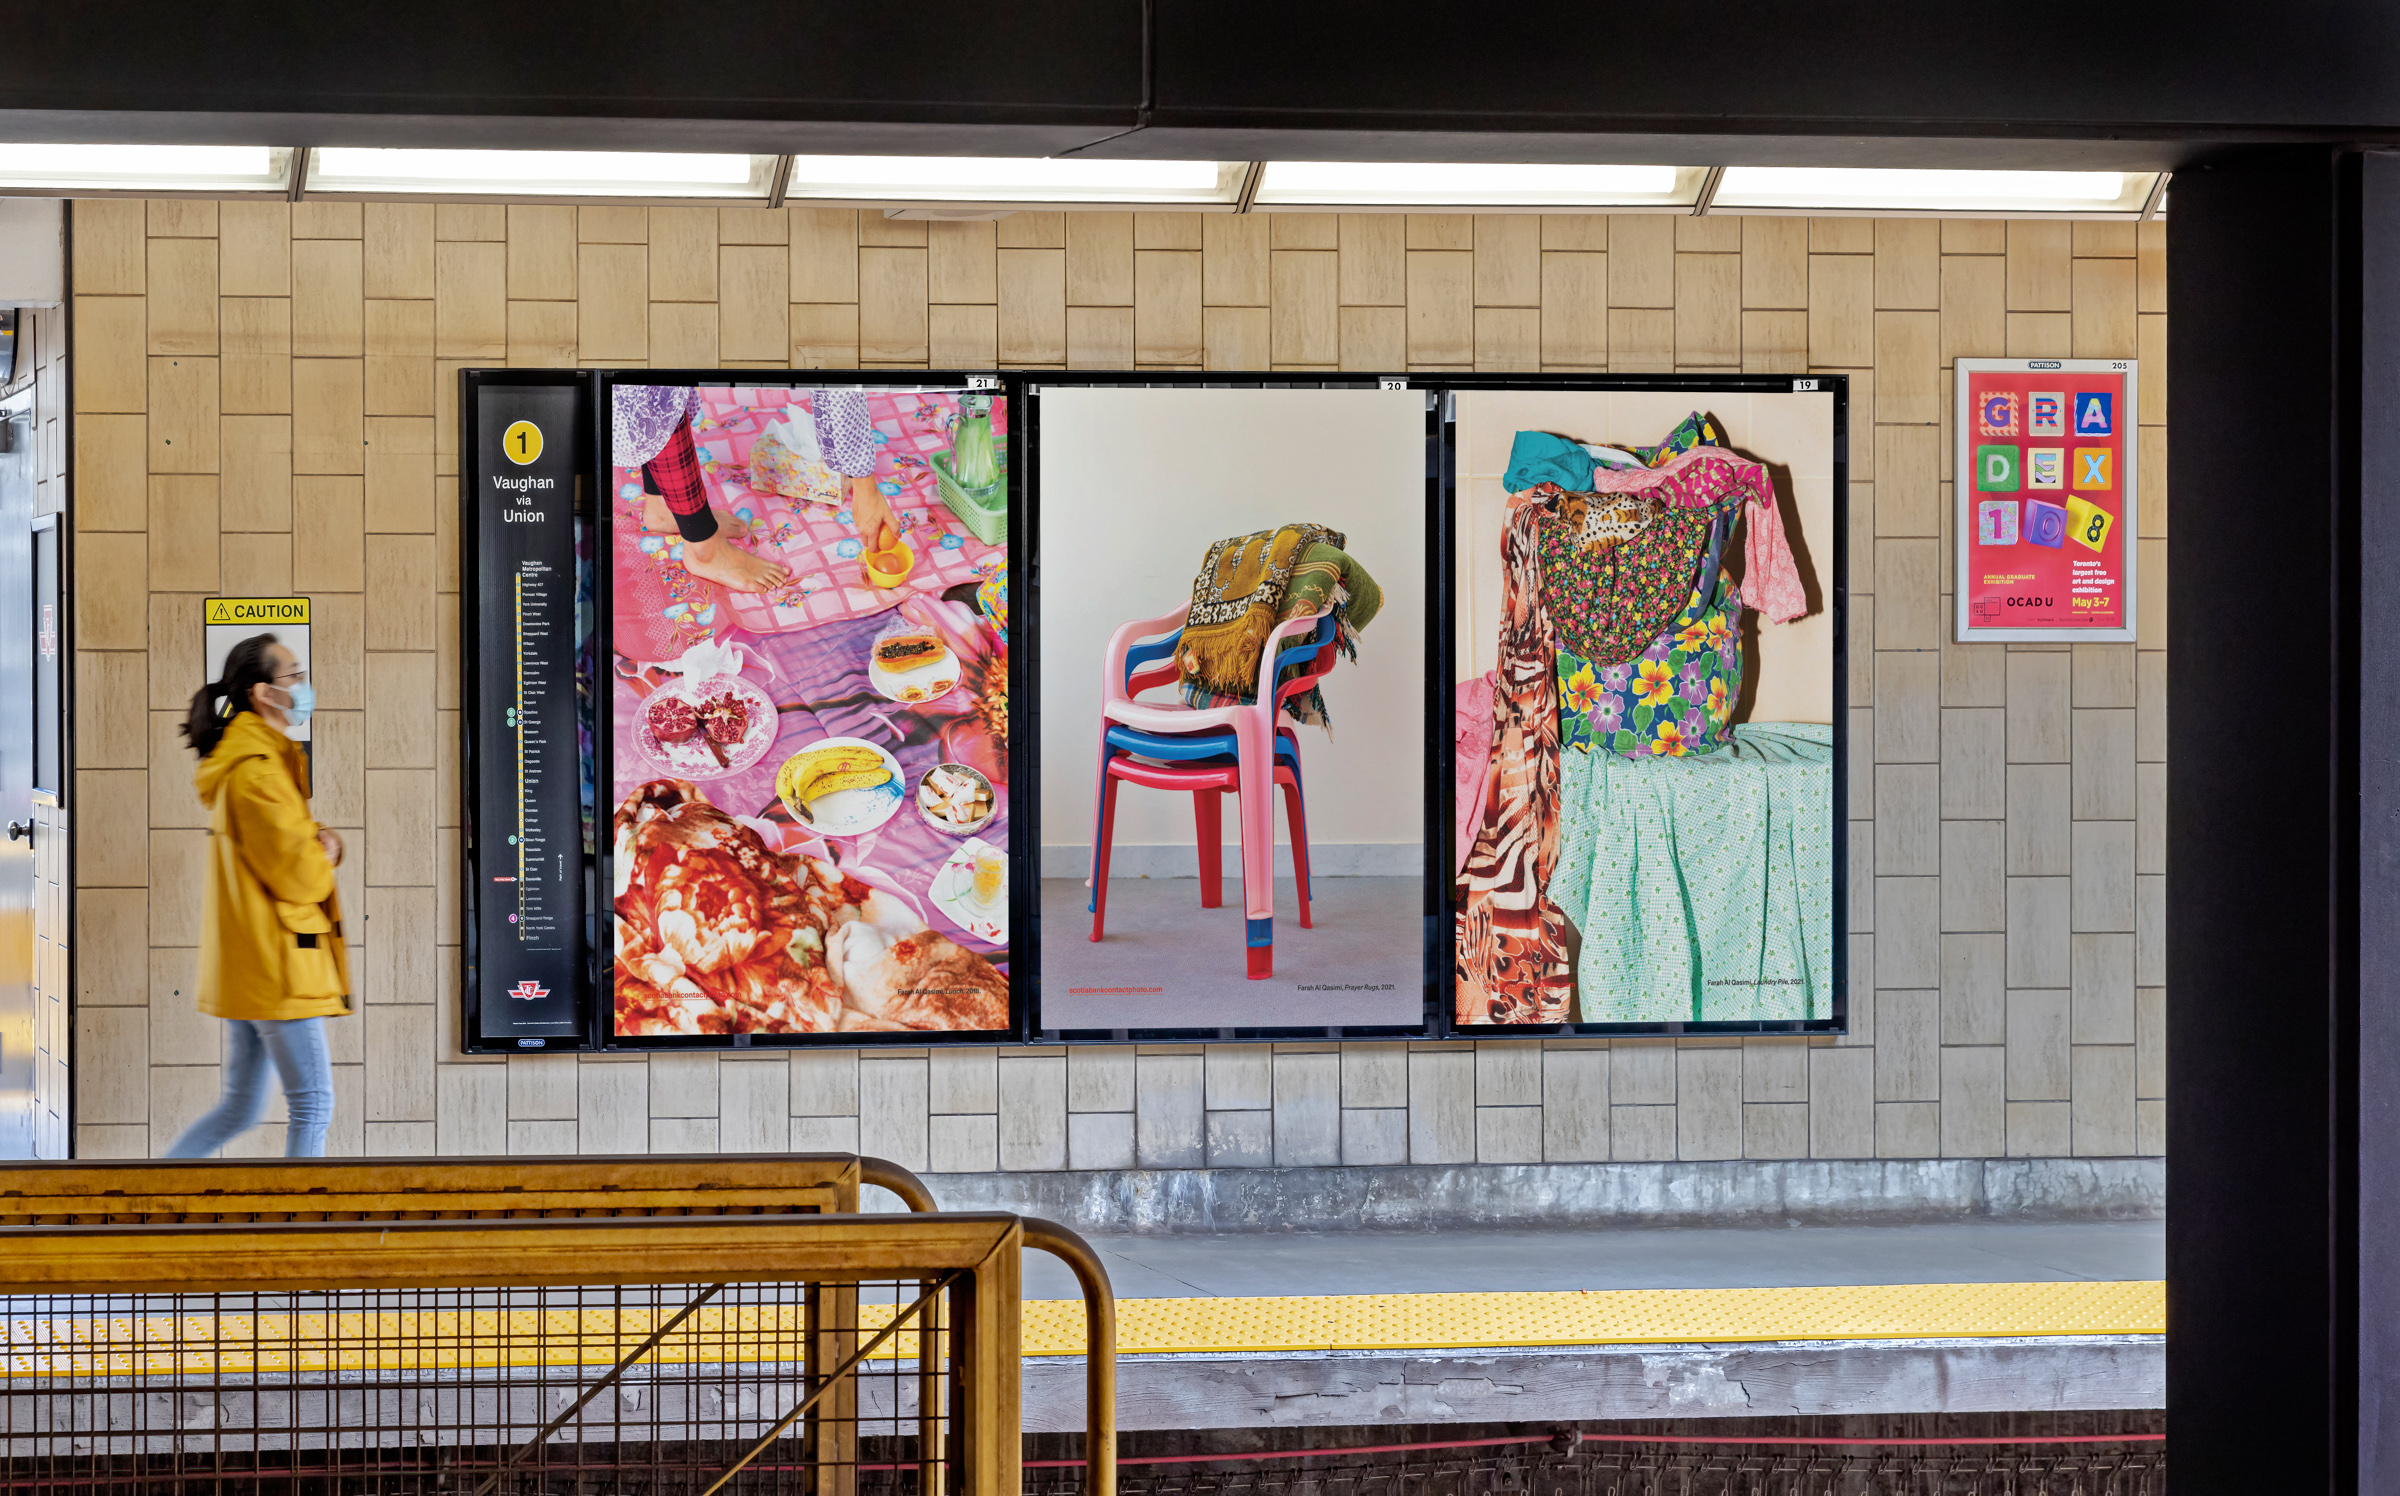     Farah Al Qasimi, Night Swimming, 2023, installation view, Davisville Subway Station, Toronto. Courtesy of the artist and Scotiabank CONTACT Photography Festival. Photo: Toni Hafkenscheid

